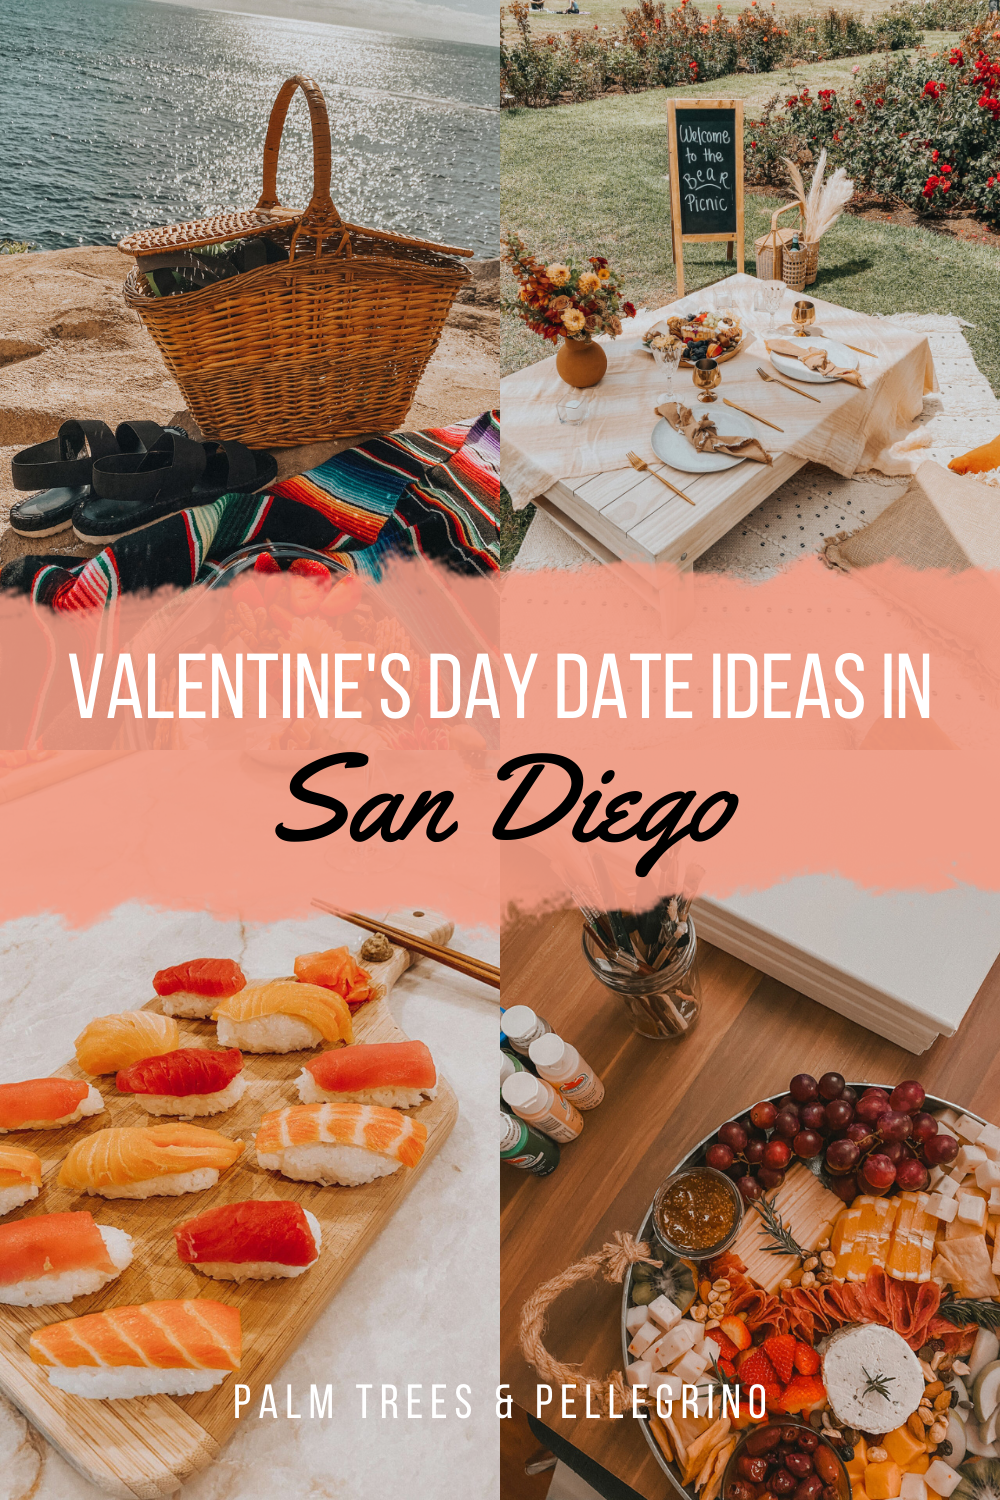 5 San Diego Valentine's Day Date Ideas You'll Love